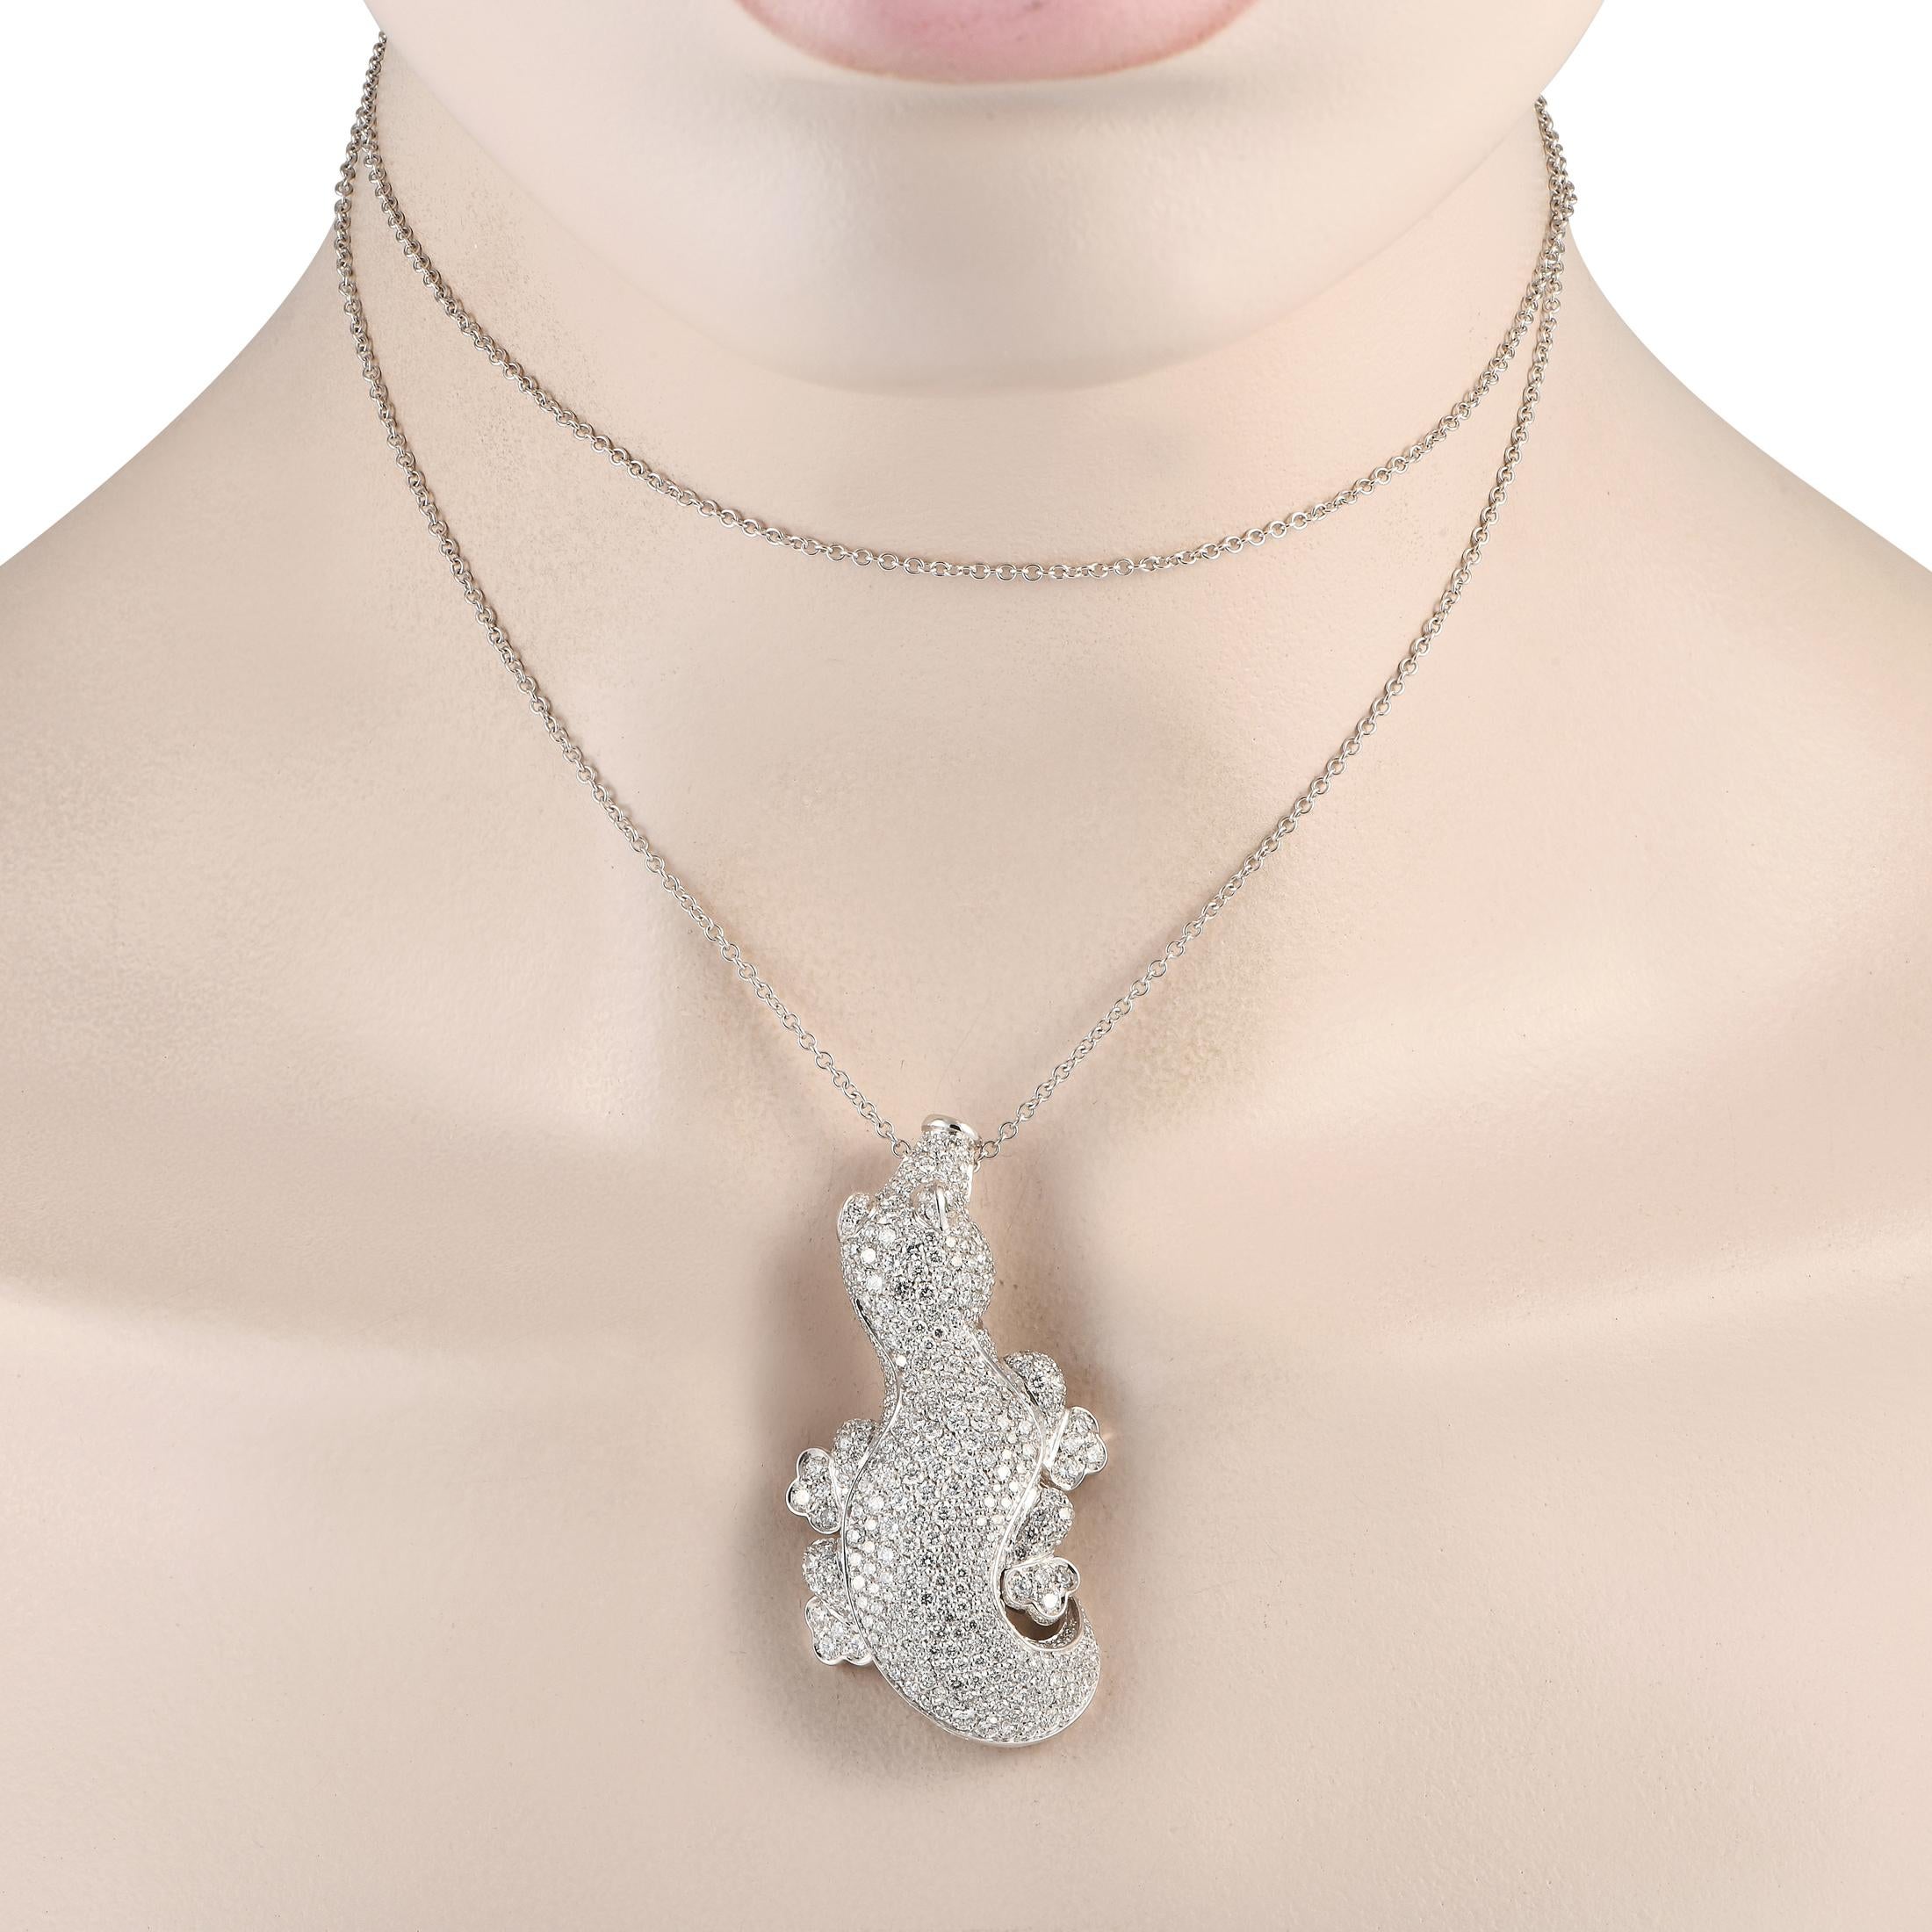 Round Cut Pasquale Bruni 18K White Gold 7.14ct Diamond Crocodile Pendant Necklace For Sale